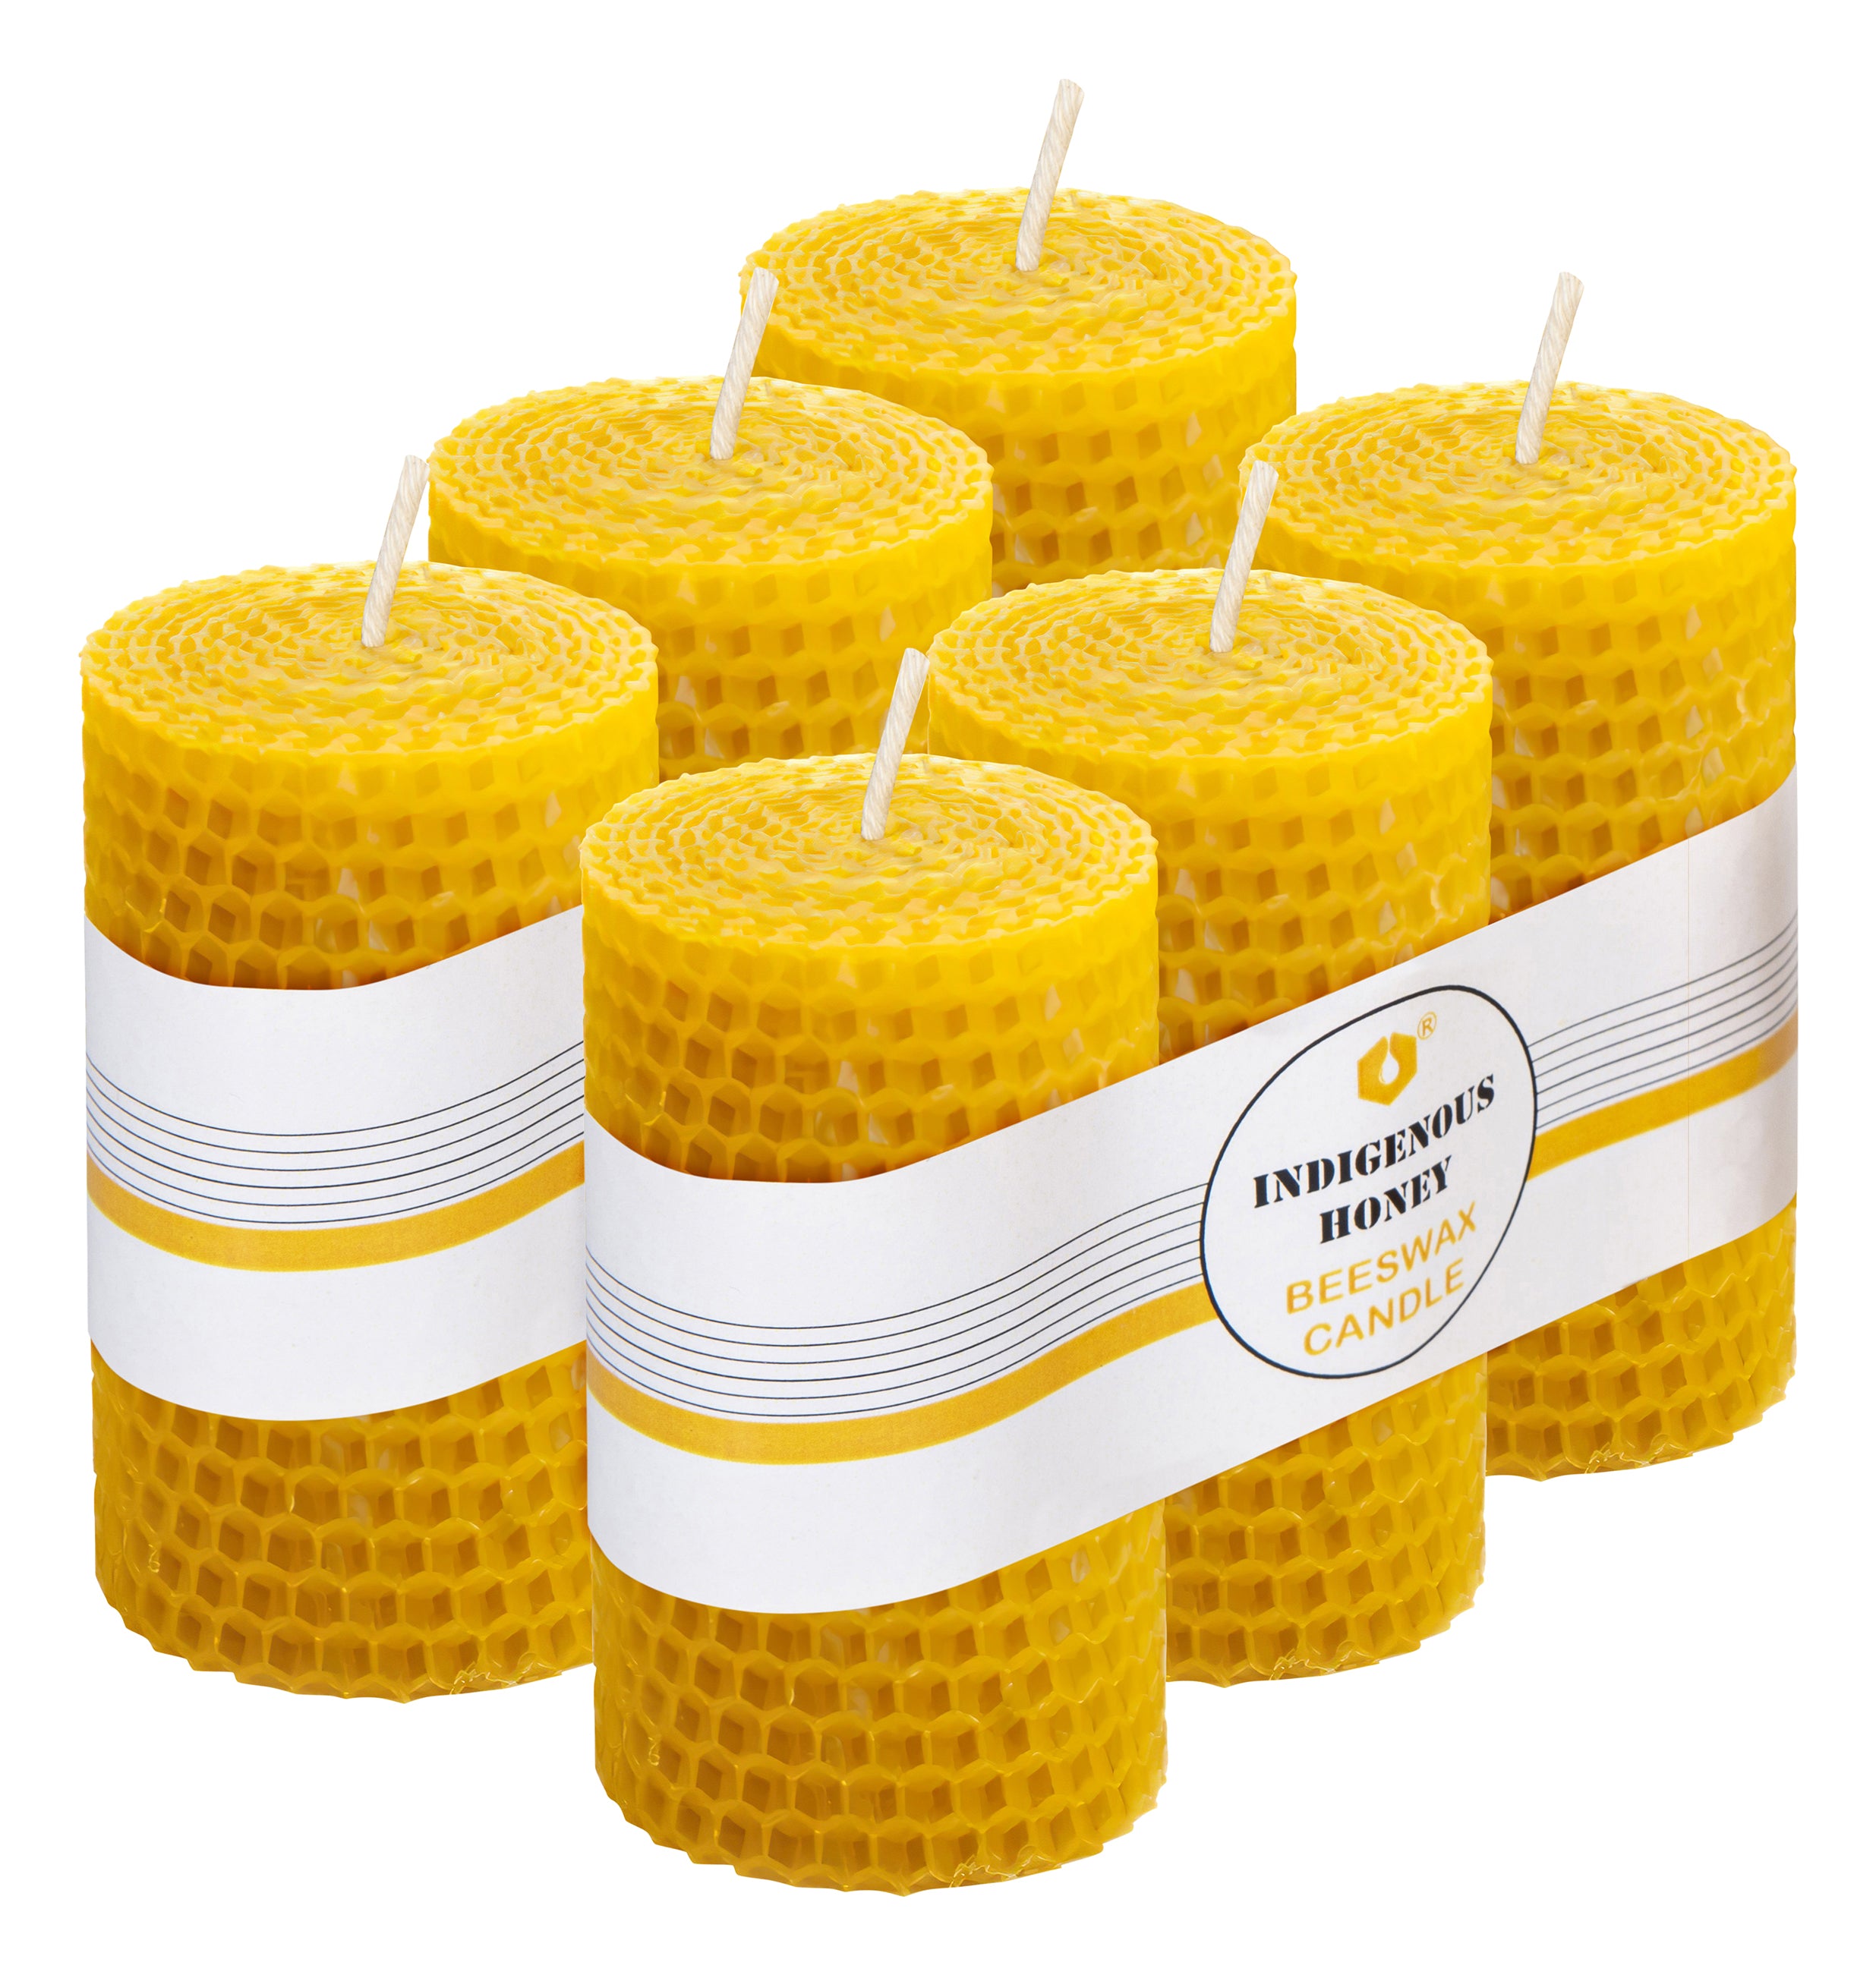 Bees Wax Candles